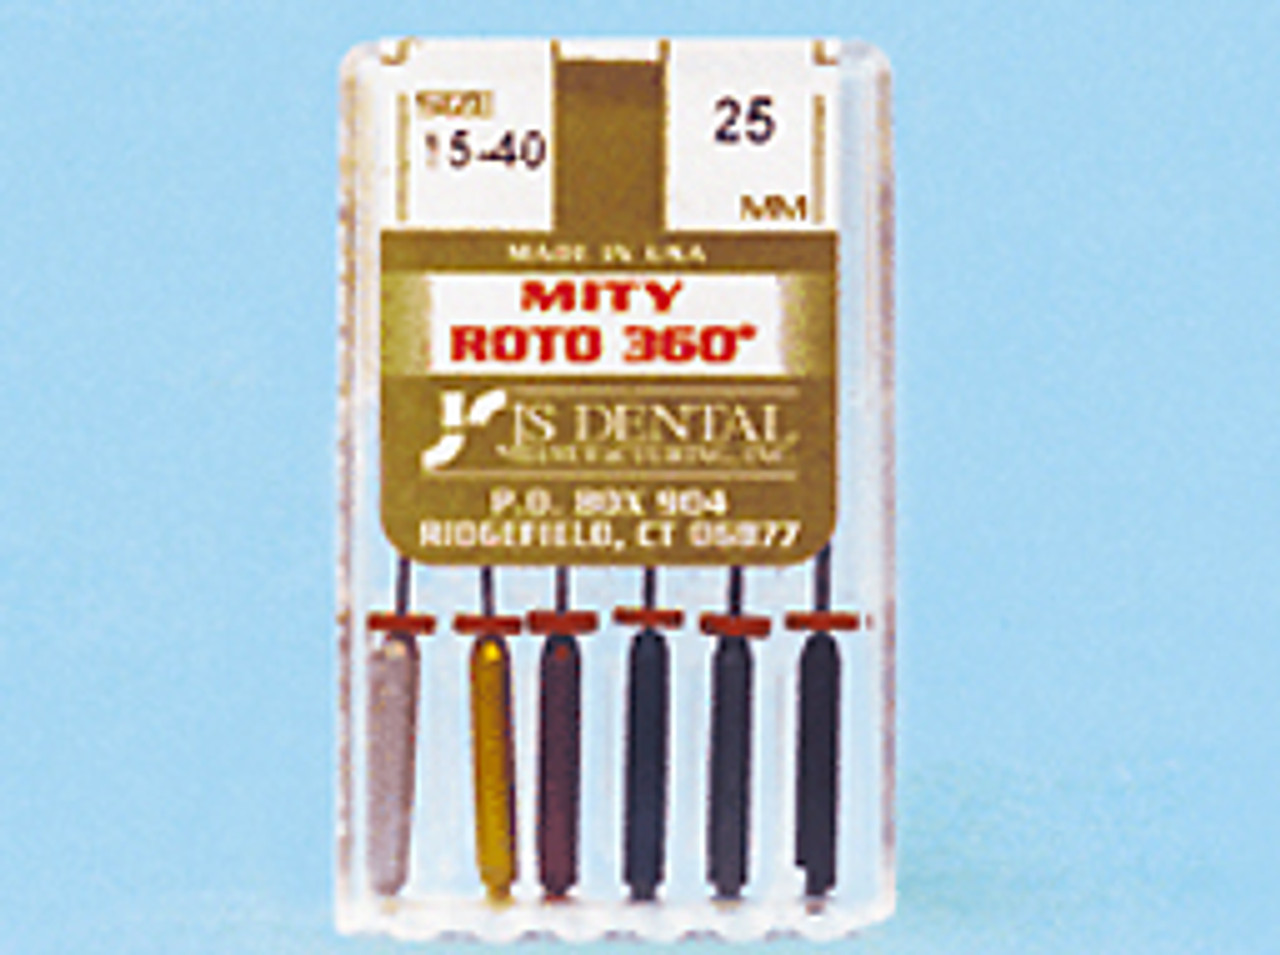 JS Dental Mity Roto 360 25 mm #45, 6/bx